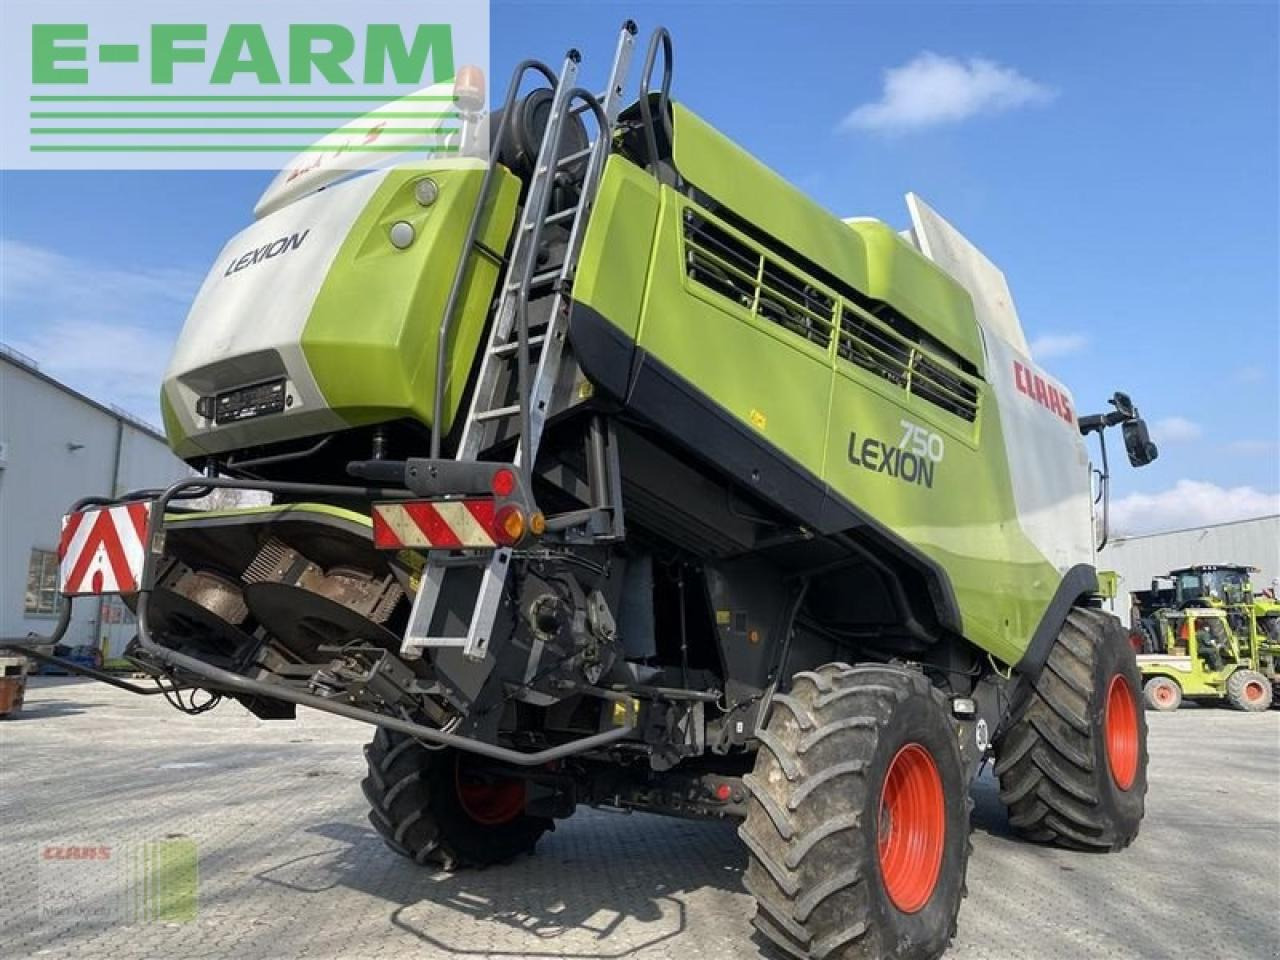 Traktor CLAAS lexion 750 v930+tw: pilt 4